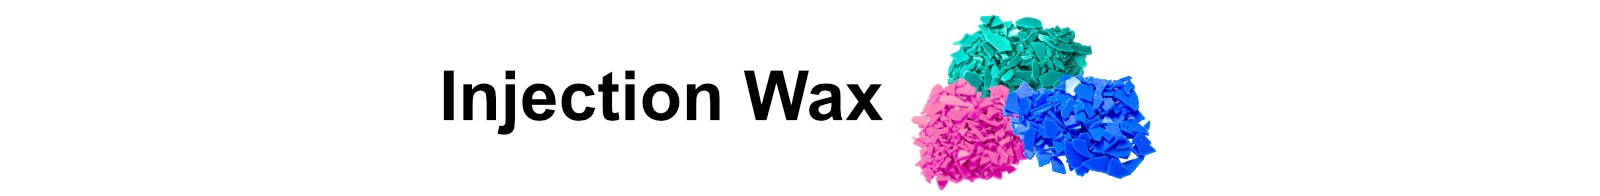 Injection Wax